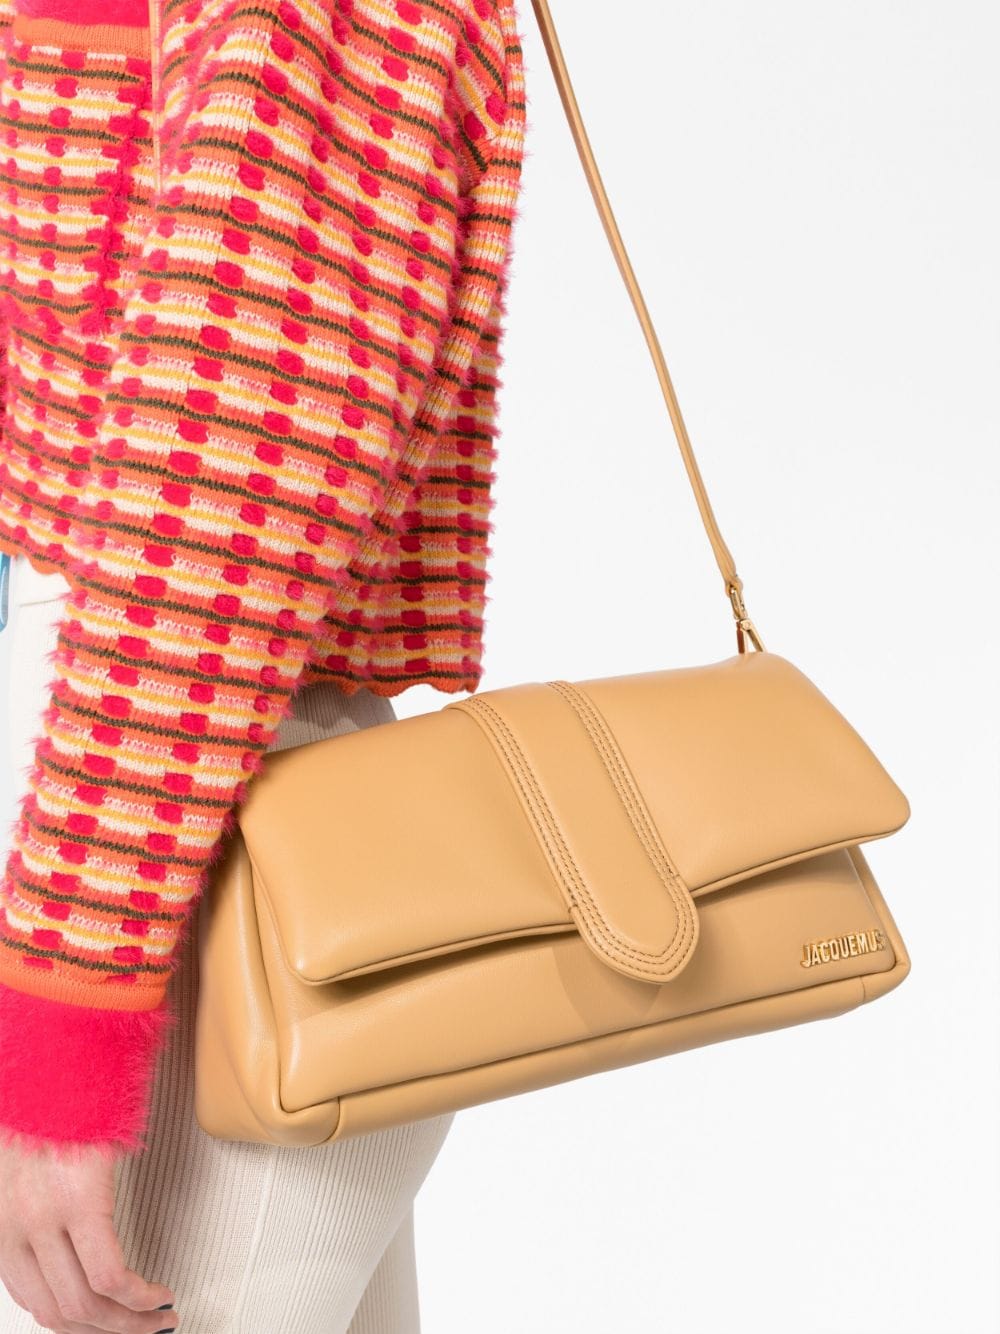 JACQUEMUS Chic and Playful Camel Leather Shoulder Handbag for Women